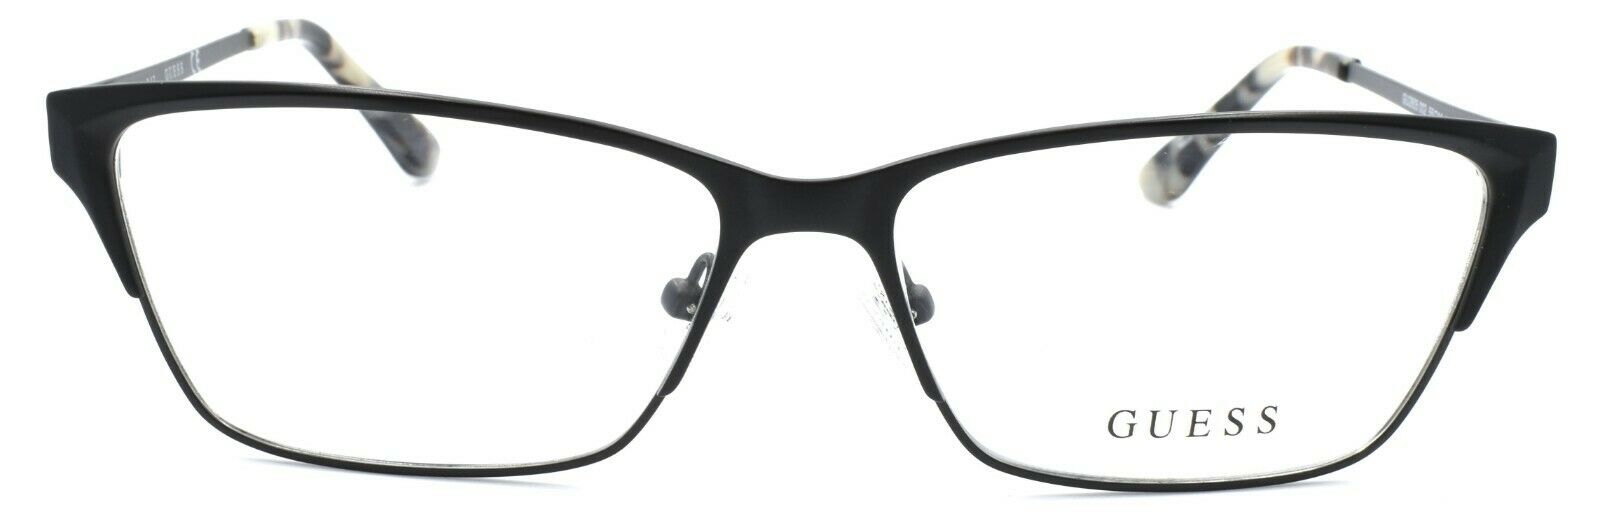 2-GUESS GU2605 002 Women's Eyeglasses Frames 55-14-140 Matte Black + Case-664689884254-IKSpecs